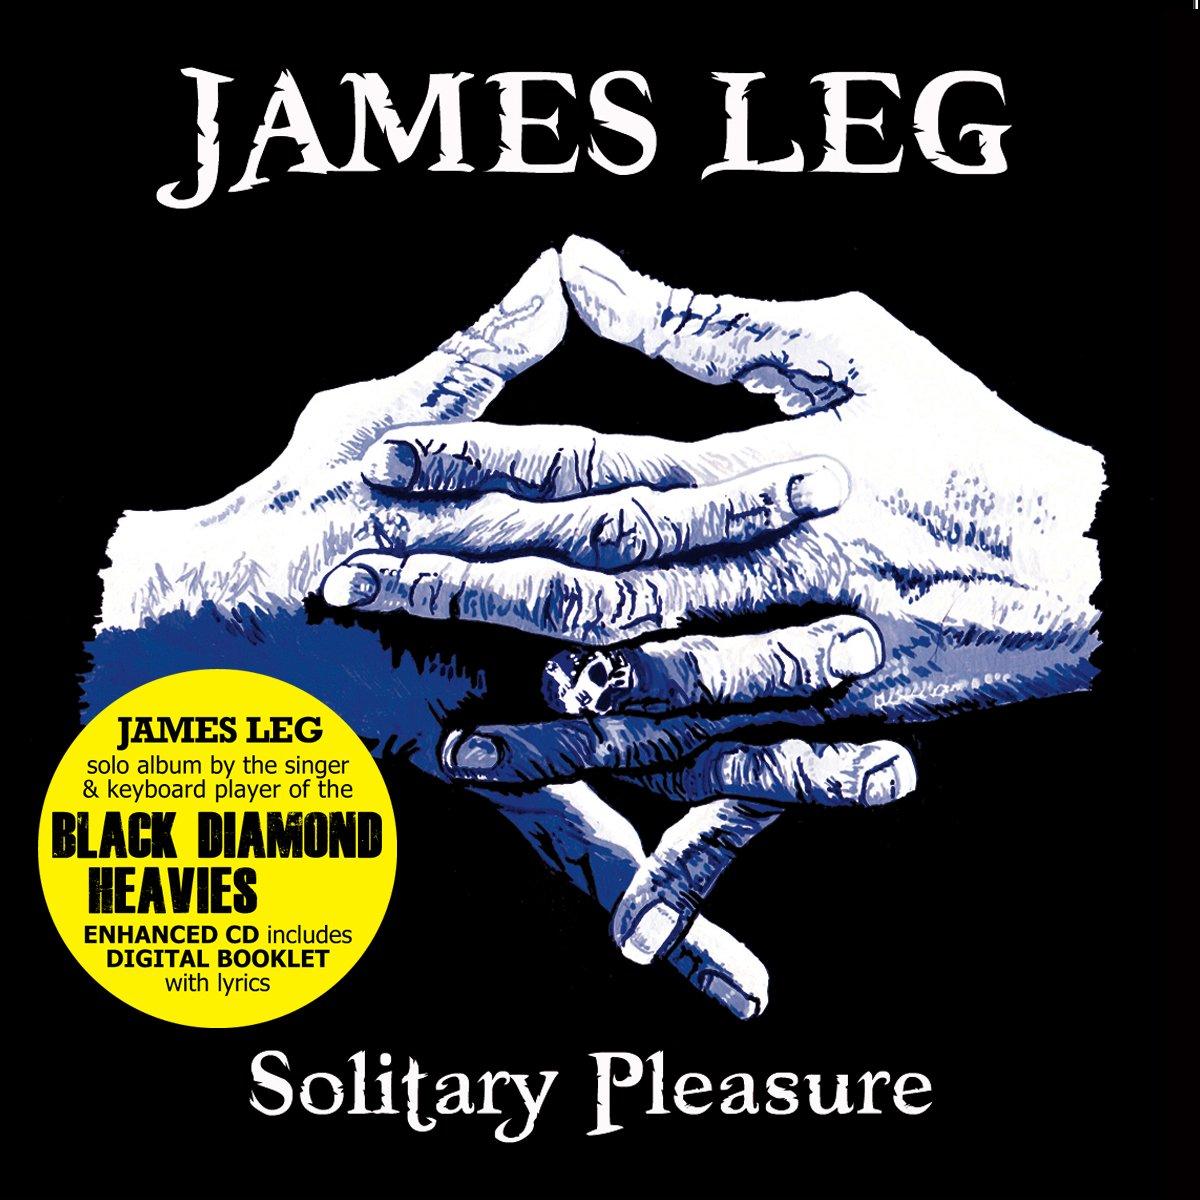 Leg, James - Solitary Pleasure